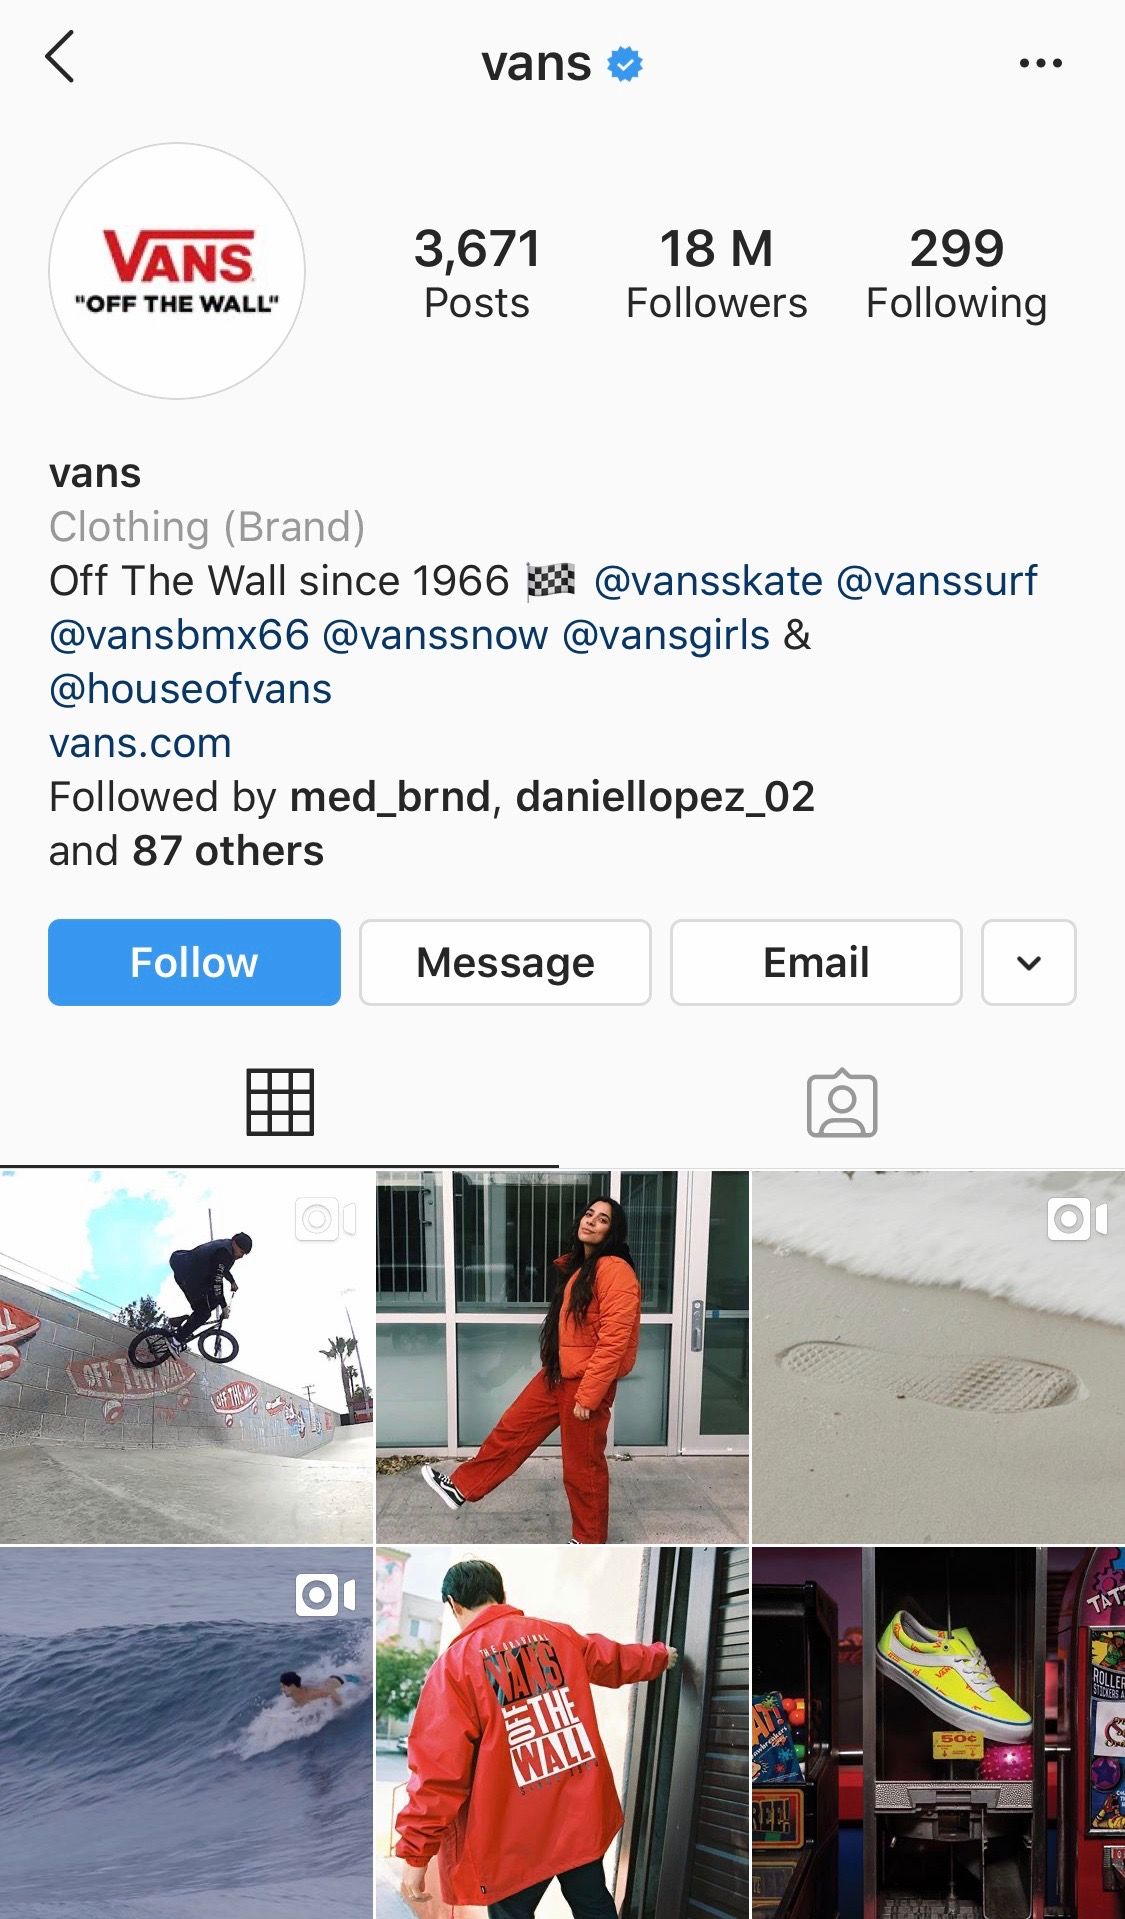 @vans links with 6 associated accounts in their Instagram bio